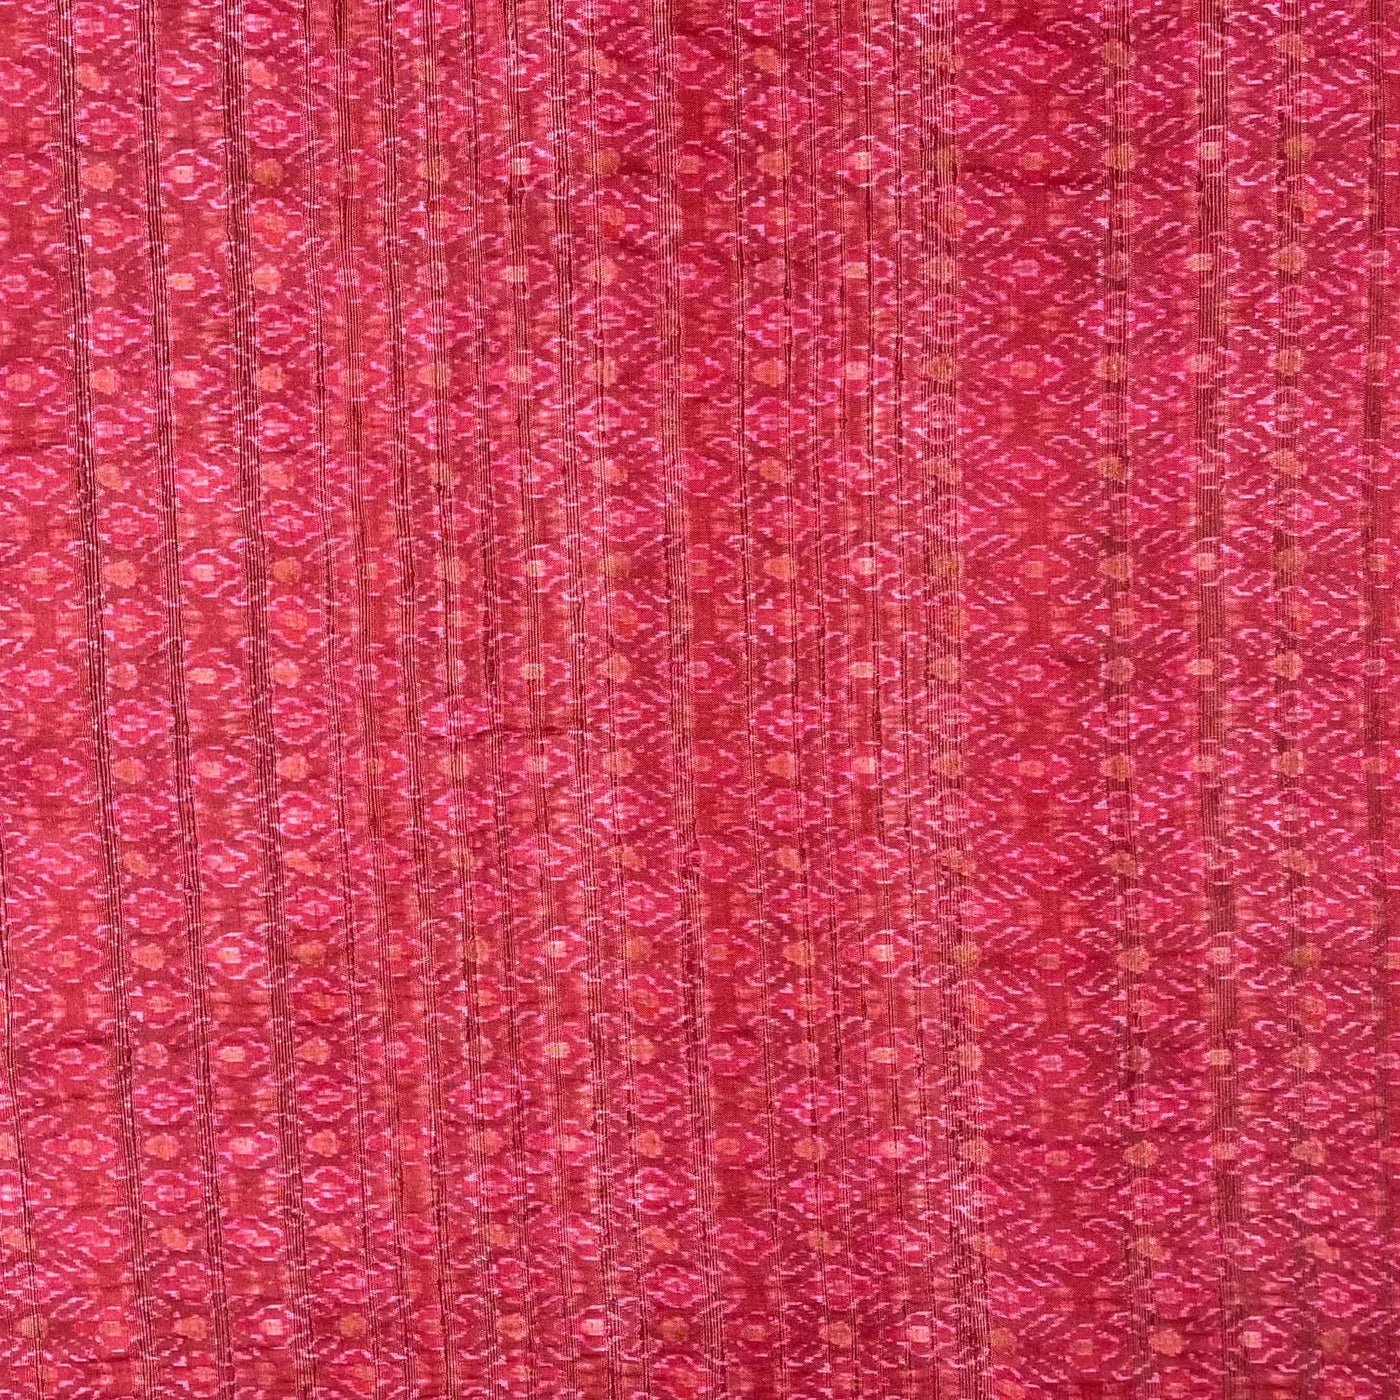 Fabric Pandit Cut Piece (CUT PIECE) Peach Red Vintage Texture Digital Printed Tussar Silk Fabric (Width 44 Inches)